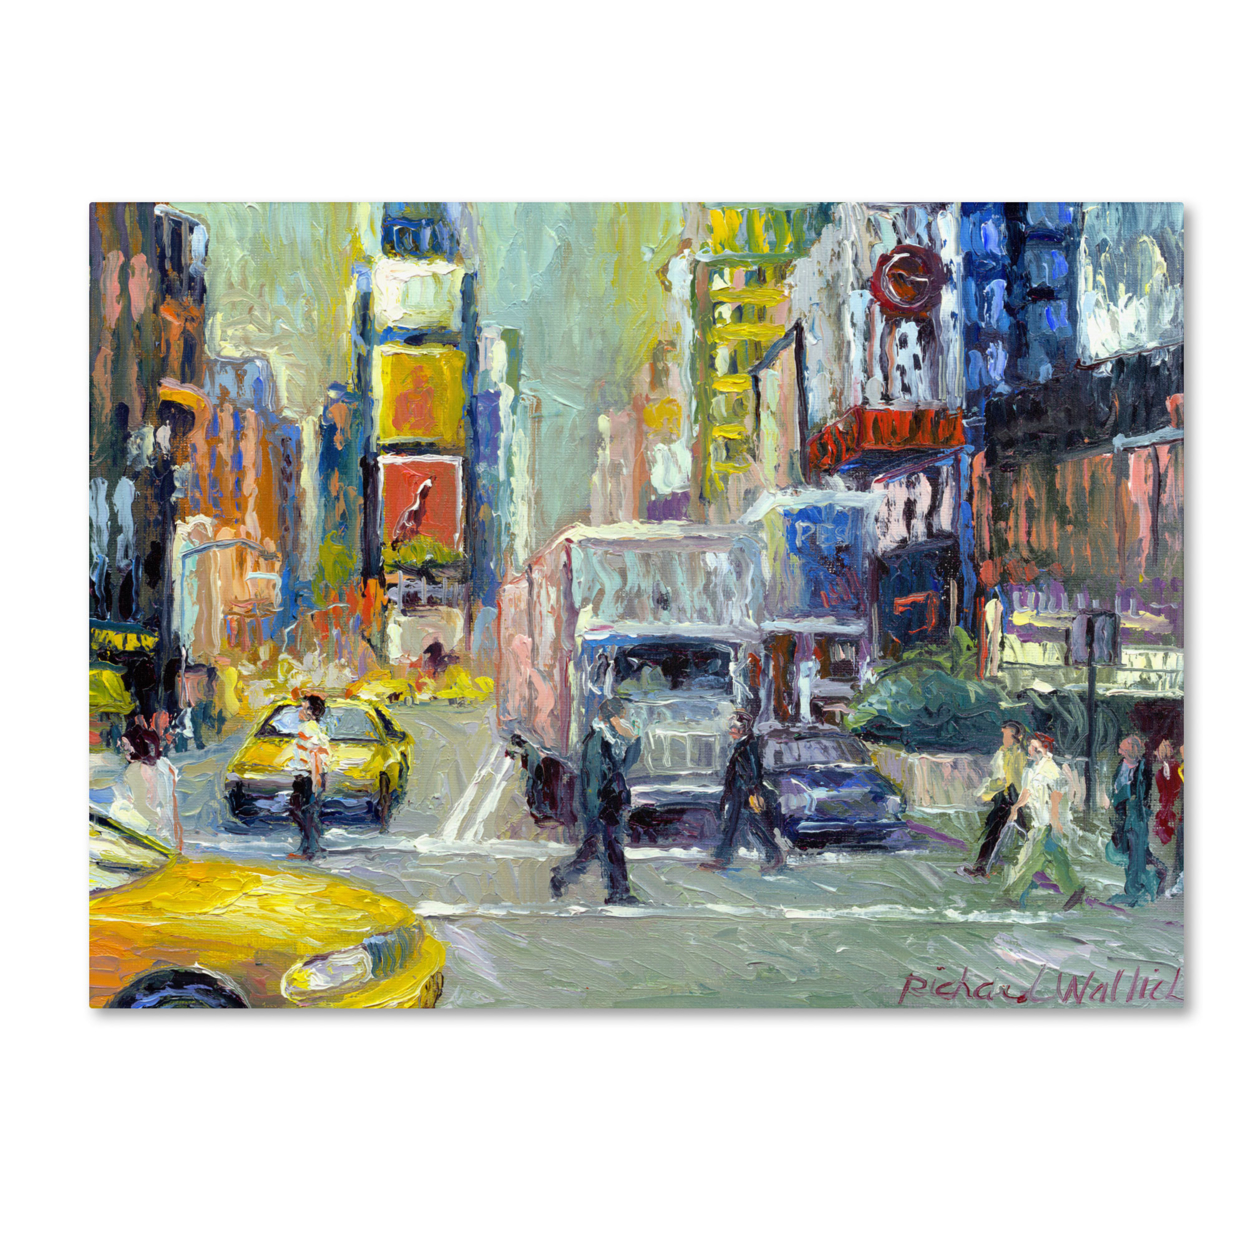 Richard Wallich 'Times Square' Canvas Wall Art 35 X 47 Inches